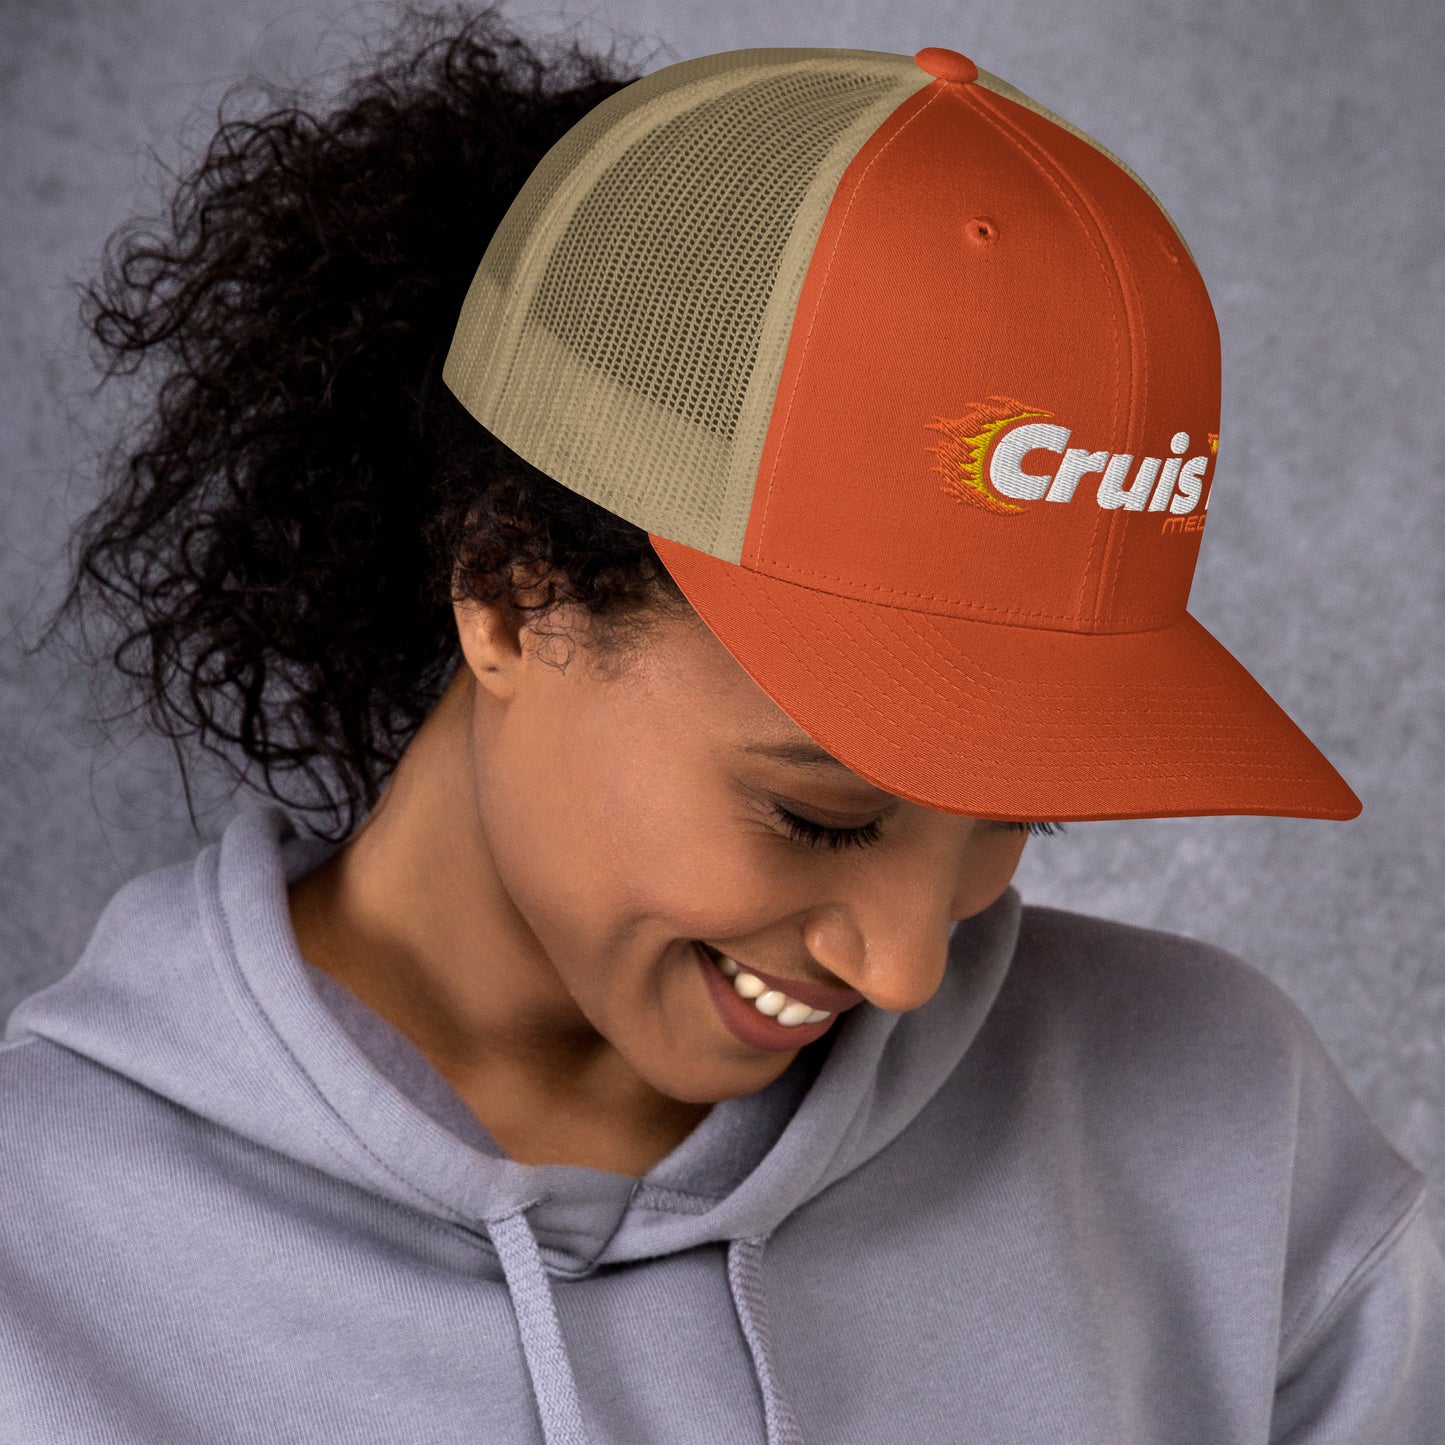 Cruis'n Media Trucker Hat